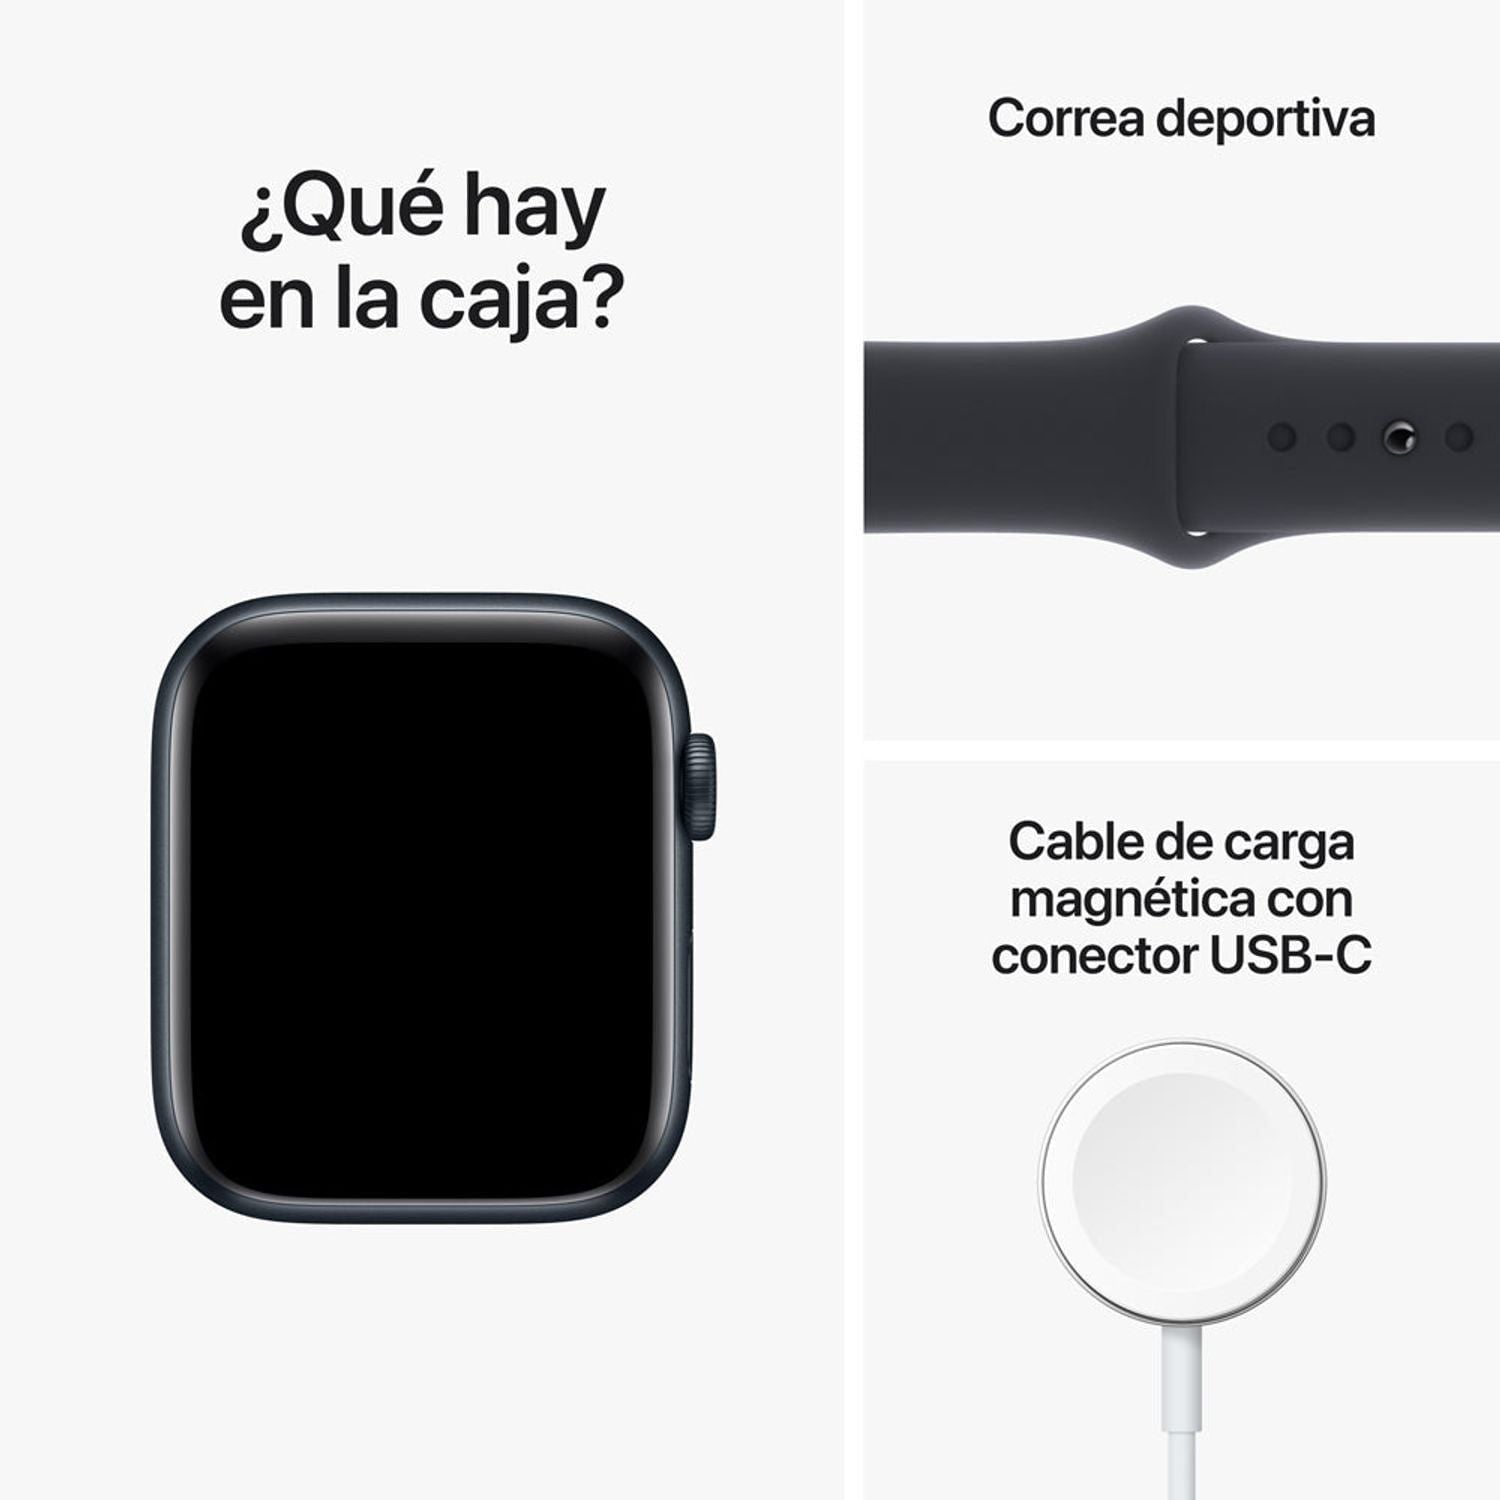 Apple Watch SE Wifi + Cellular